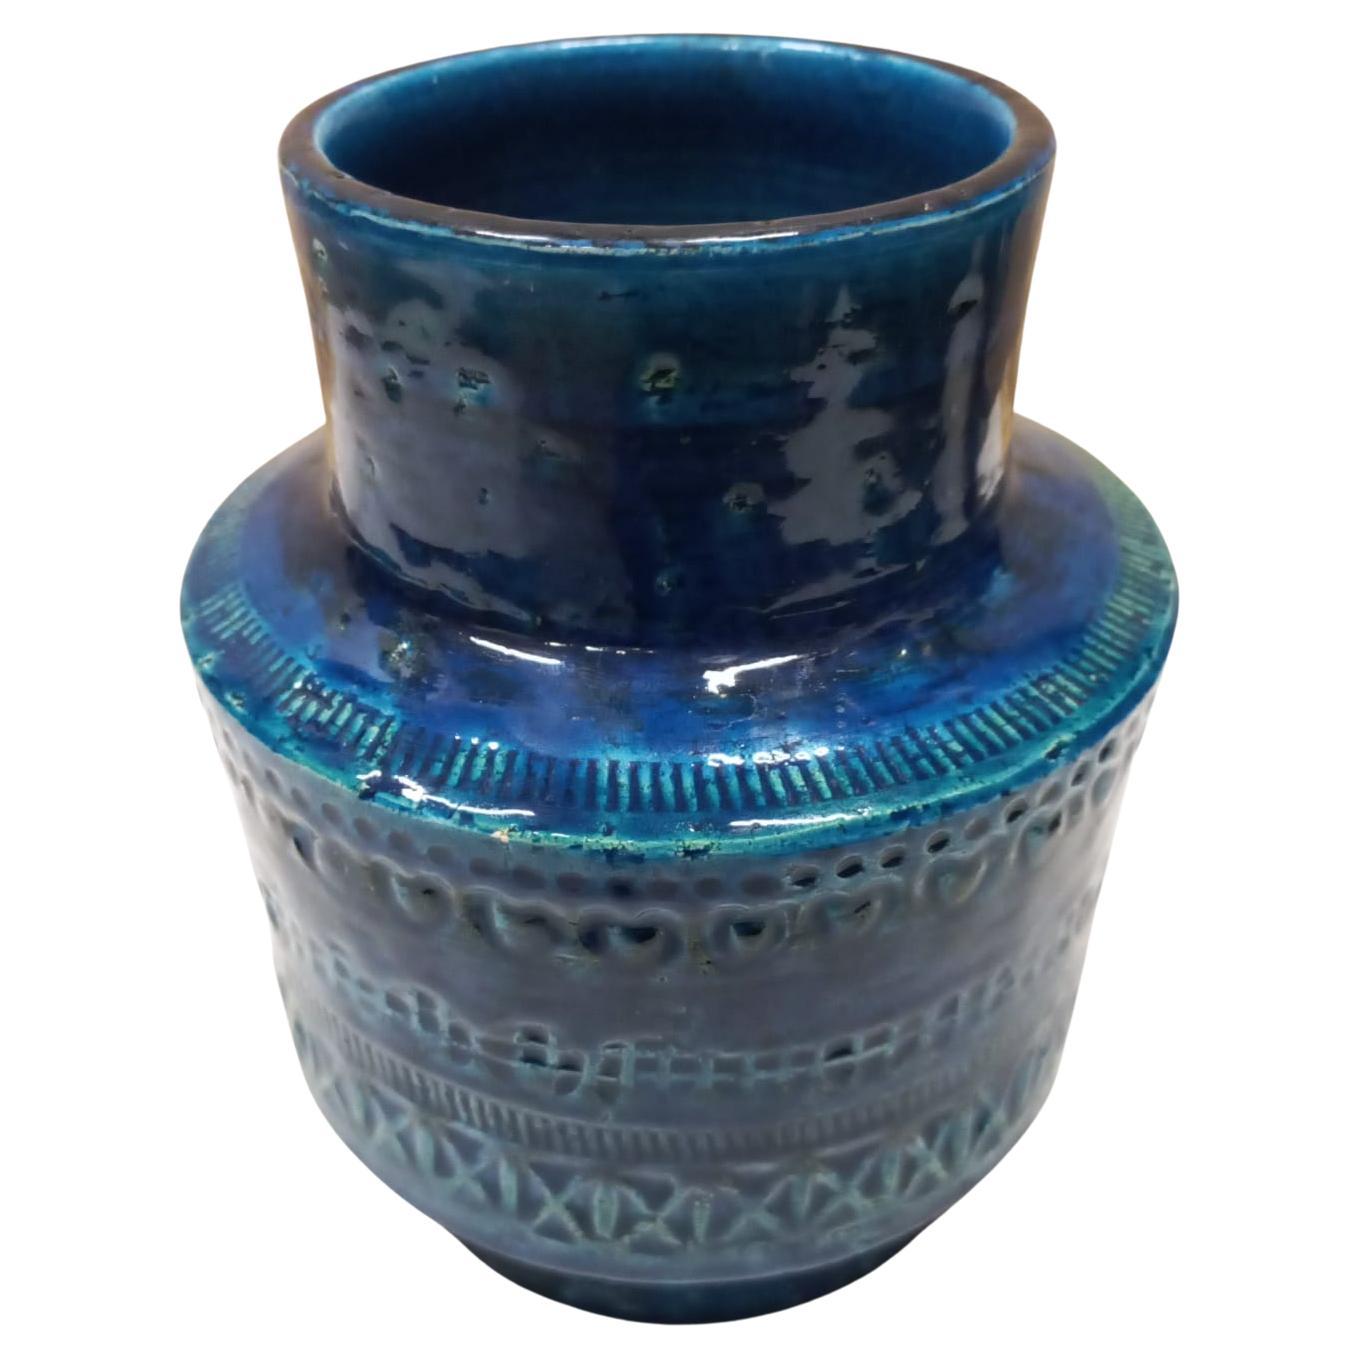 Other Aldo Londi Circular Ceramic Vase, Blue Glazed, Bitossi, Mid 20th Century